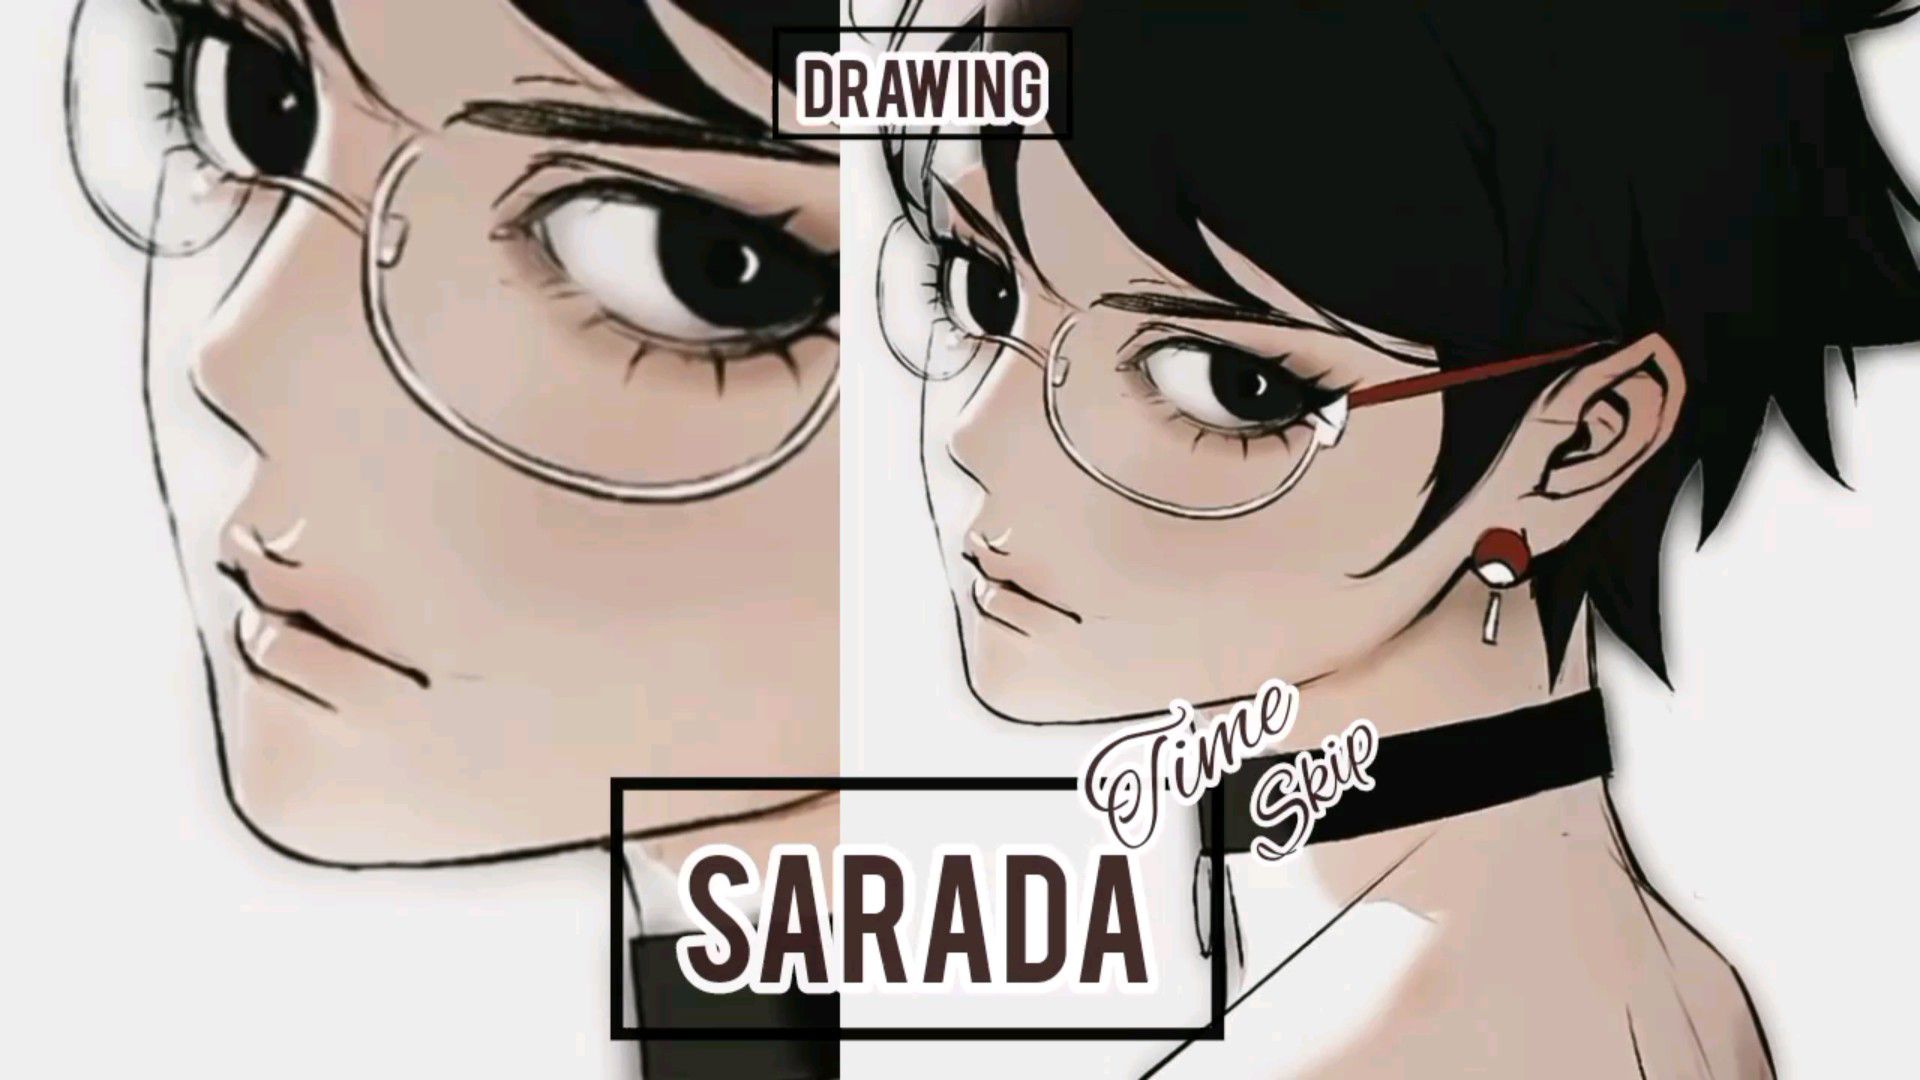 SARADA UCHIHA - TIME SKIP DUALITY Illustration remastered by me. : r/Boruto